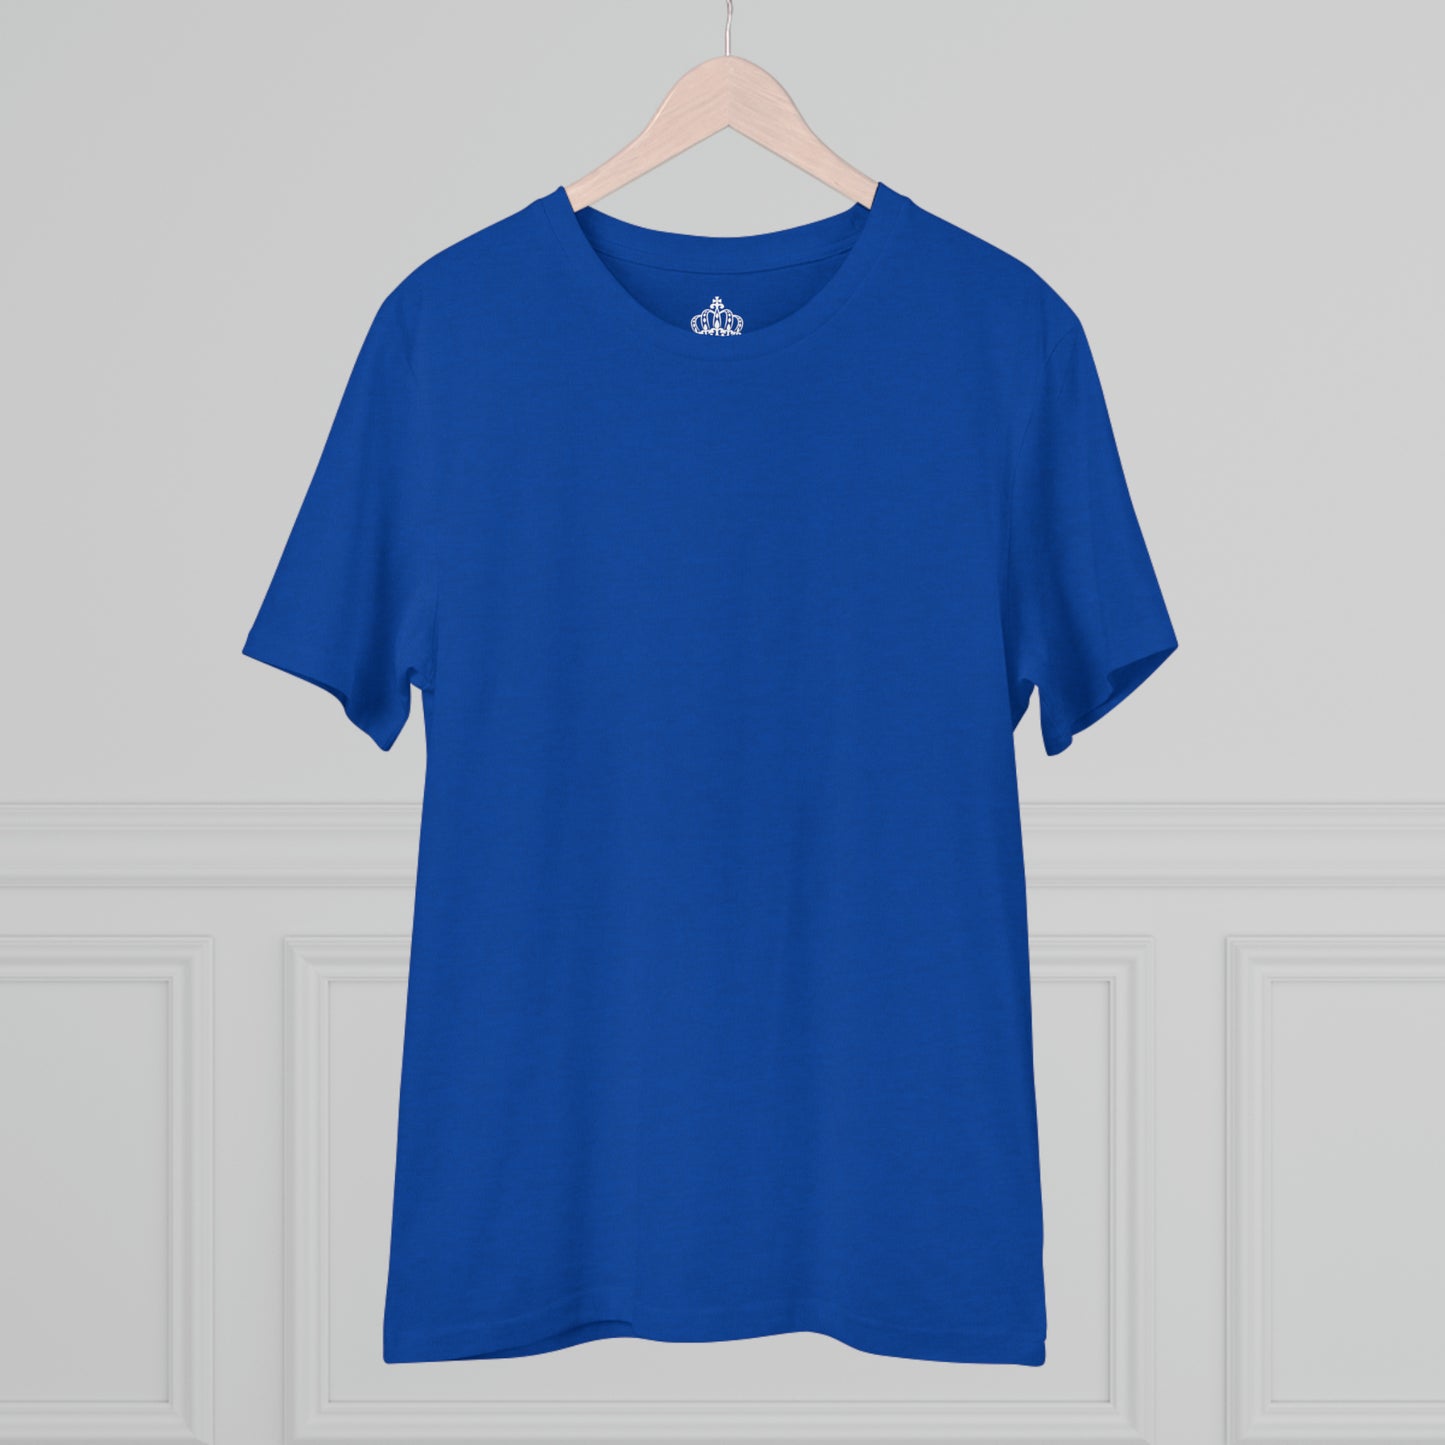 Mid Heather Royal Blue - Organic Creator T-shirt - Unisex